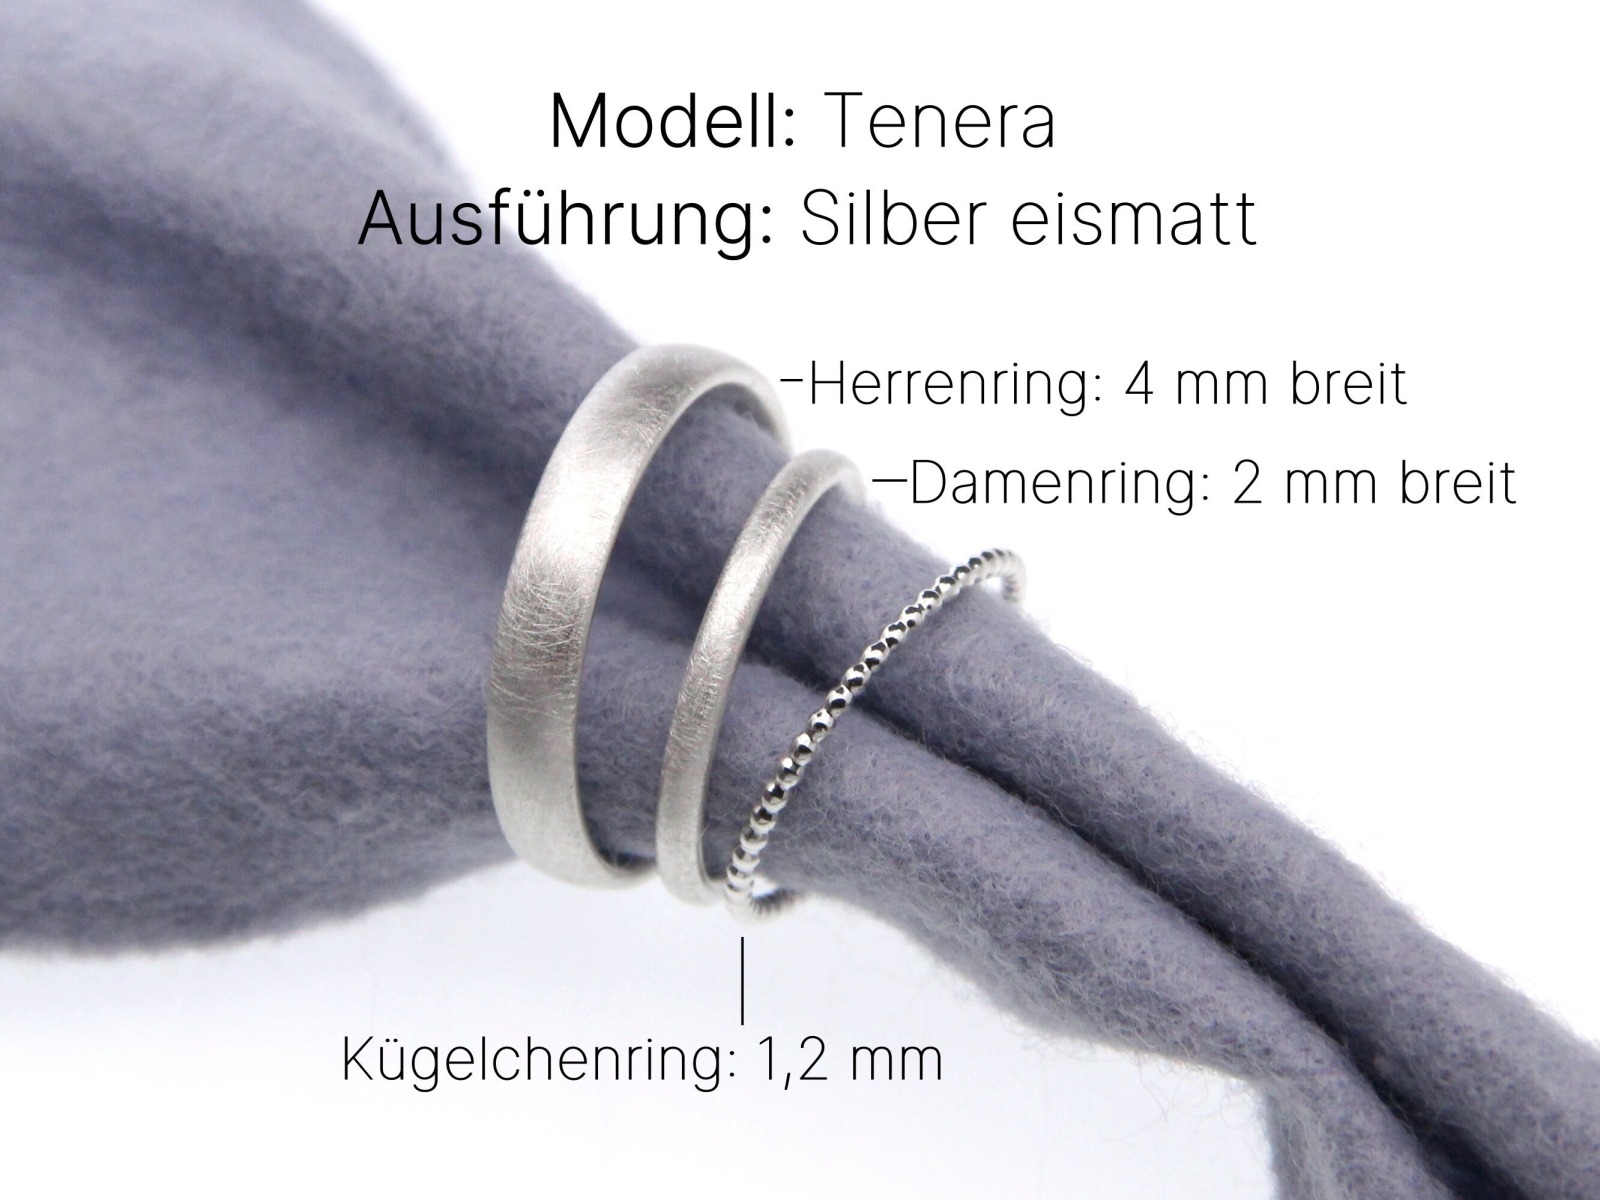 Eismattes Eheringe Set Silber - Modell Tenera 5